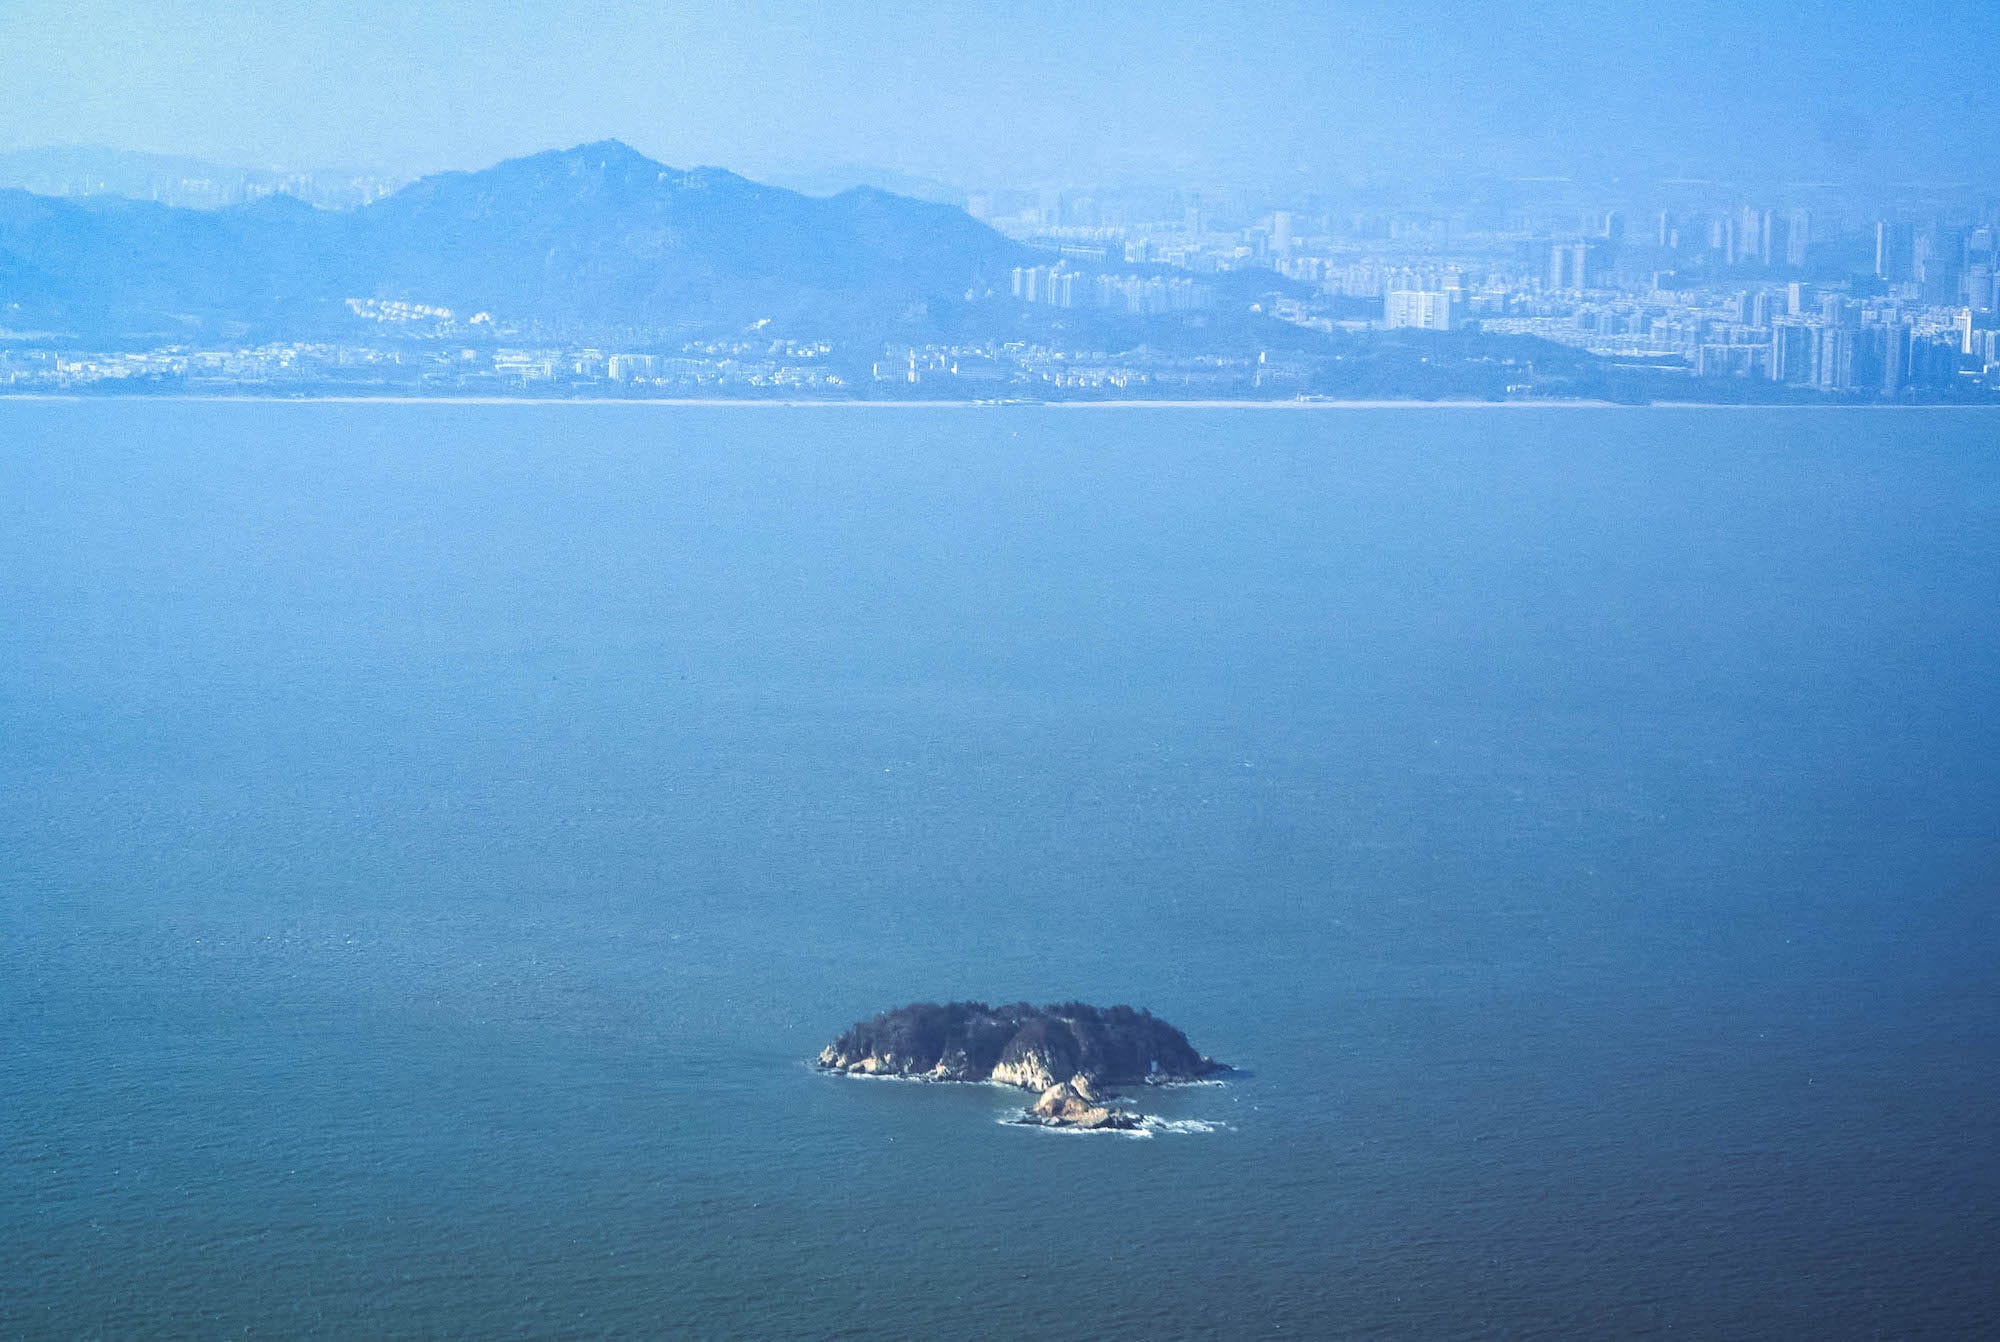 South China Sea between Xiamen in China and Kinmen in Taiwan